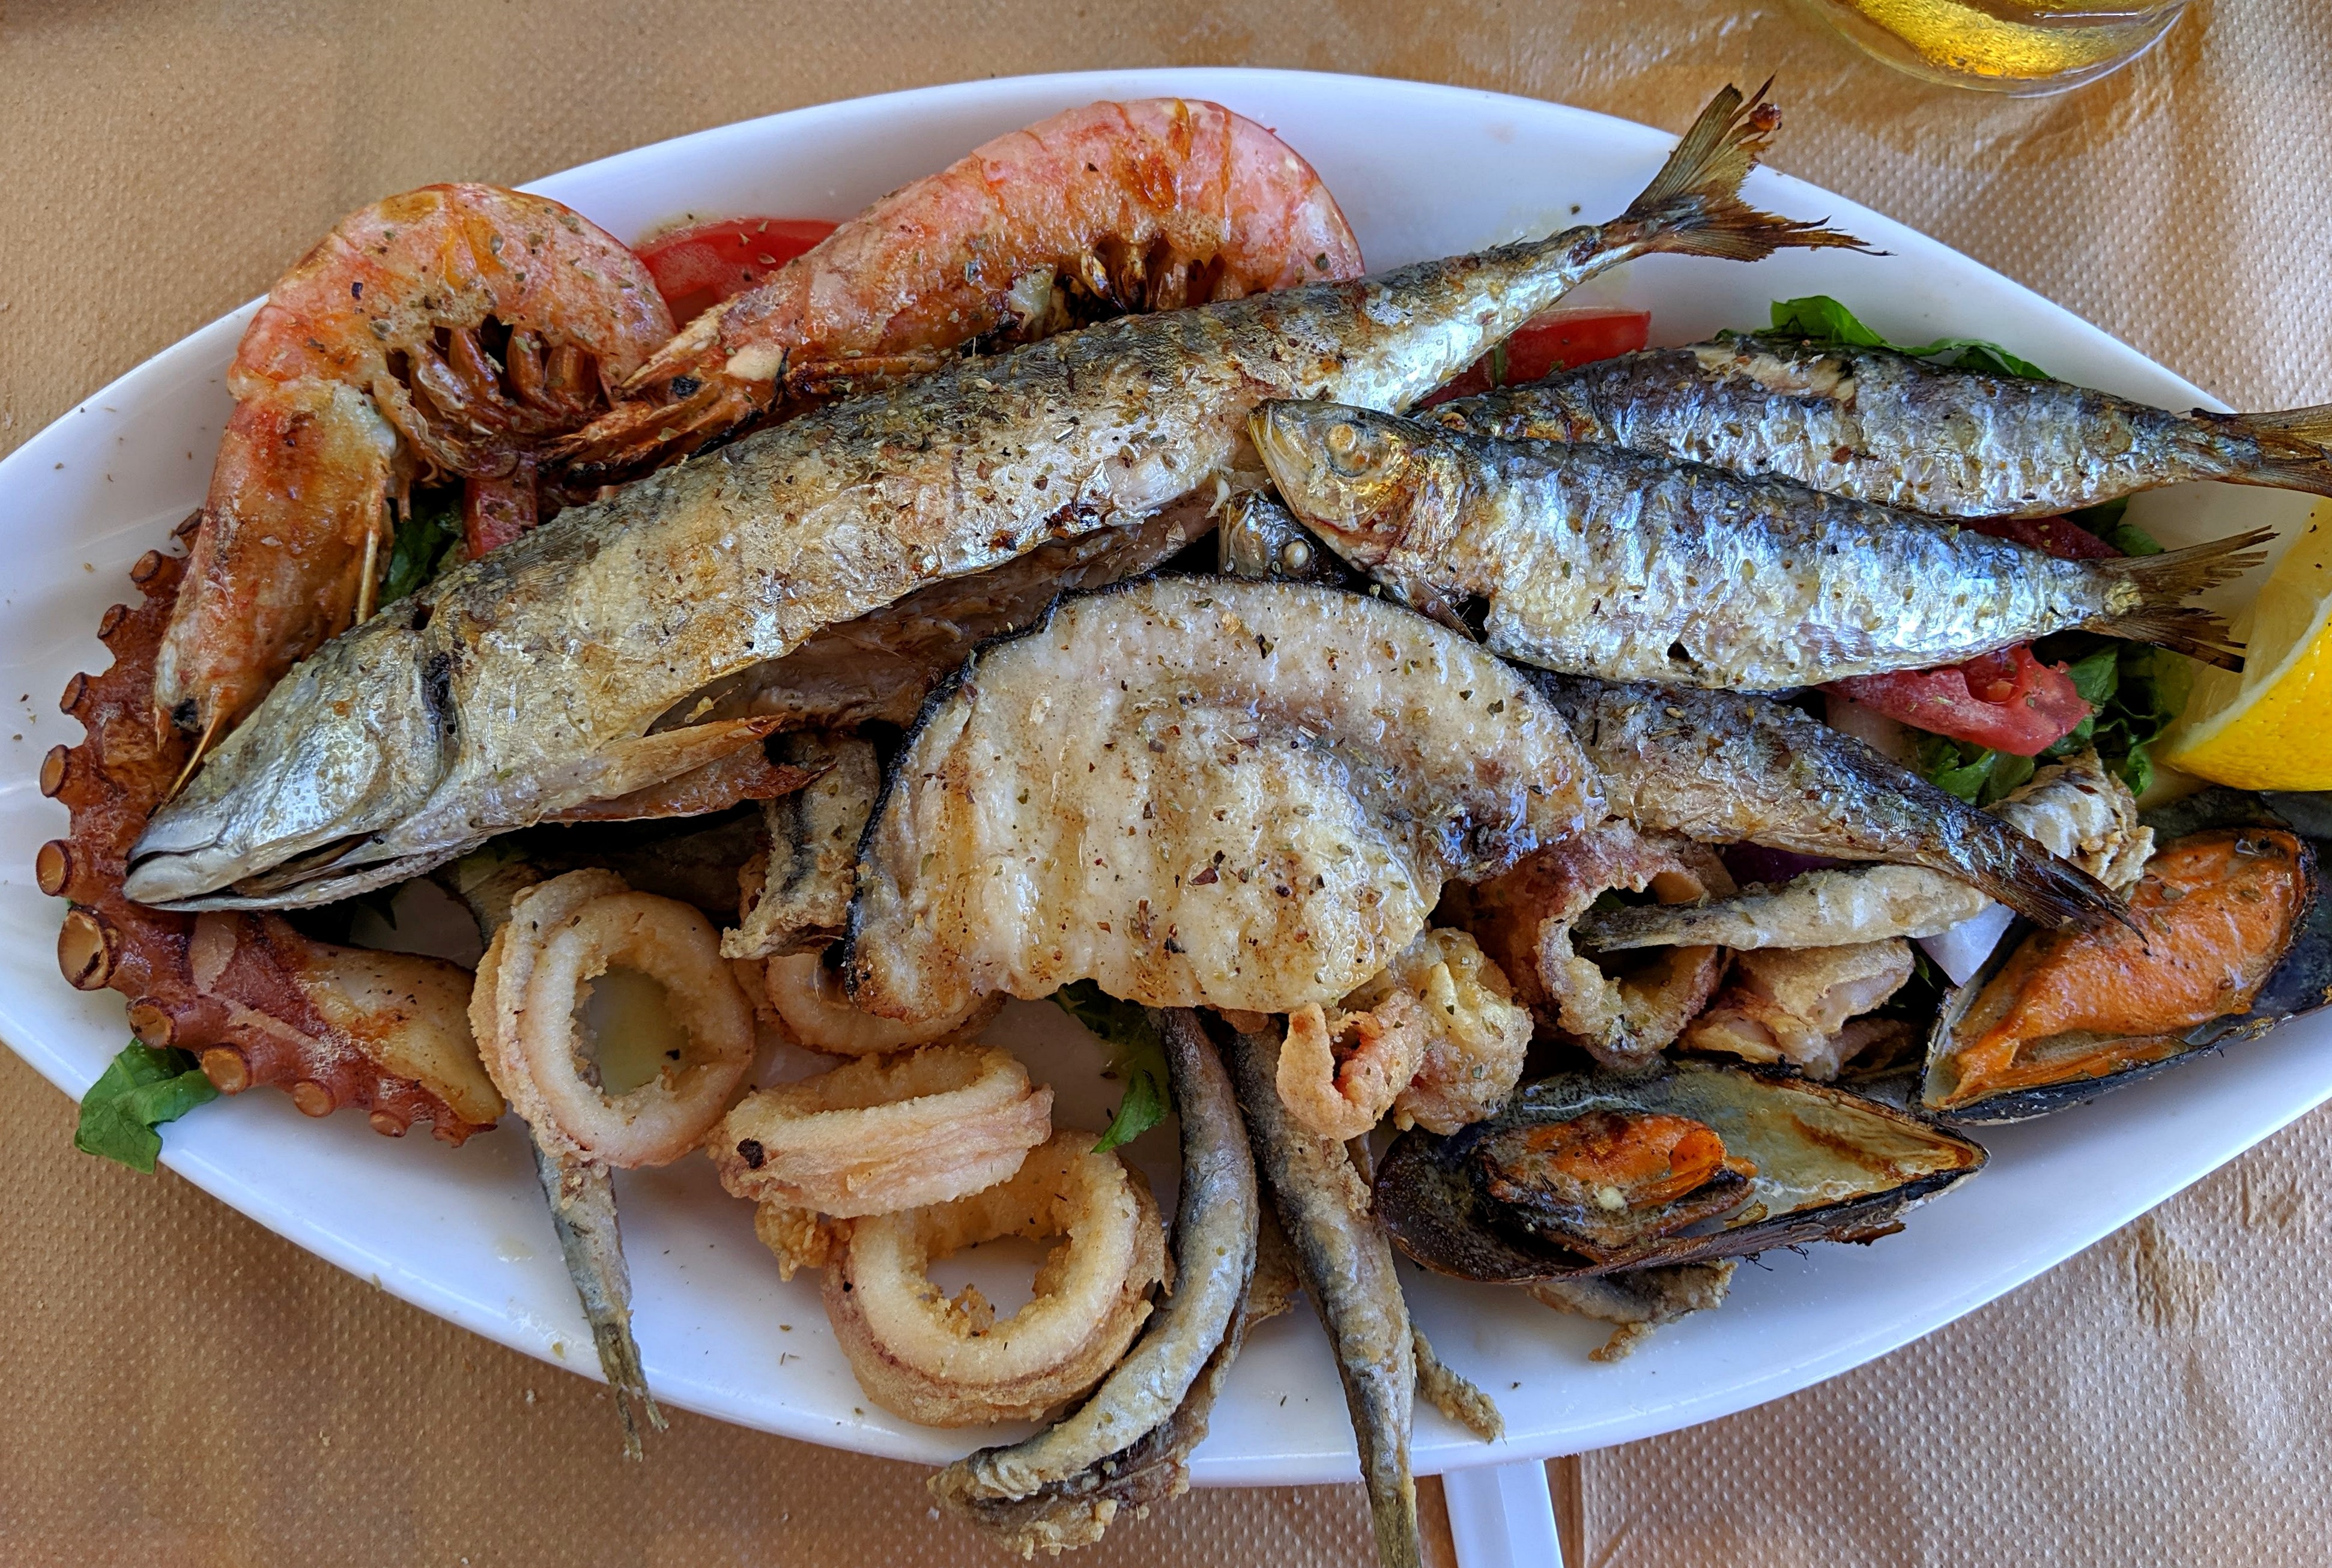 Mixed seafood at Yiannoulis Taverna in Parikia